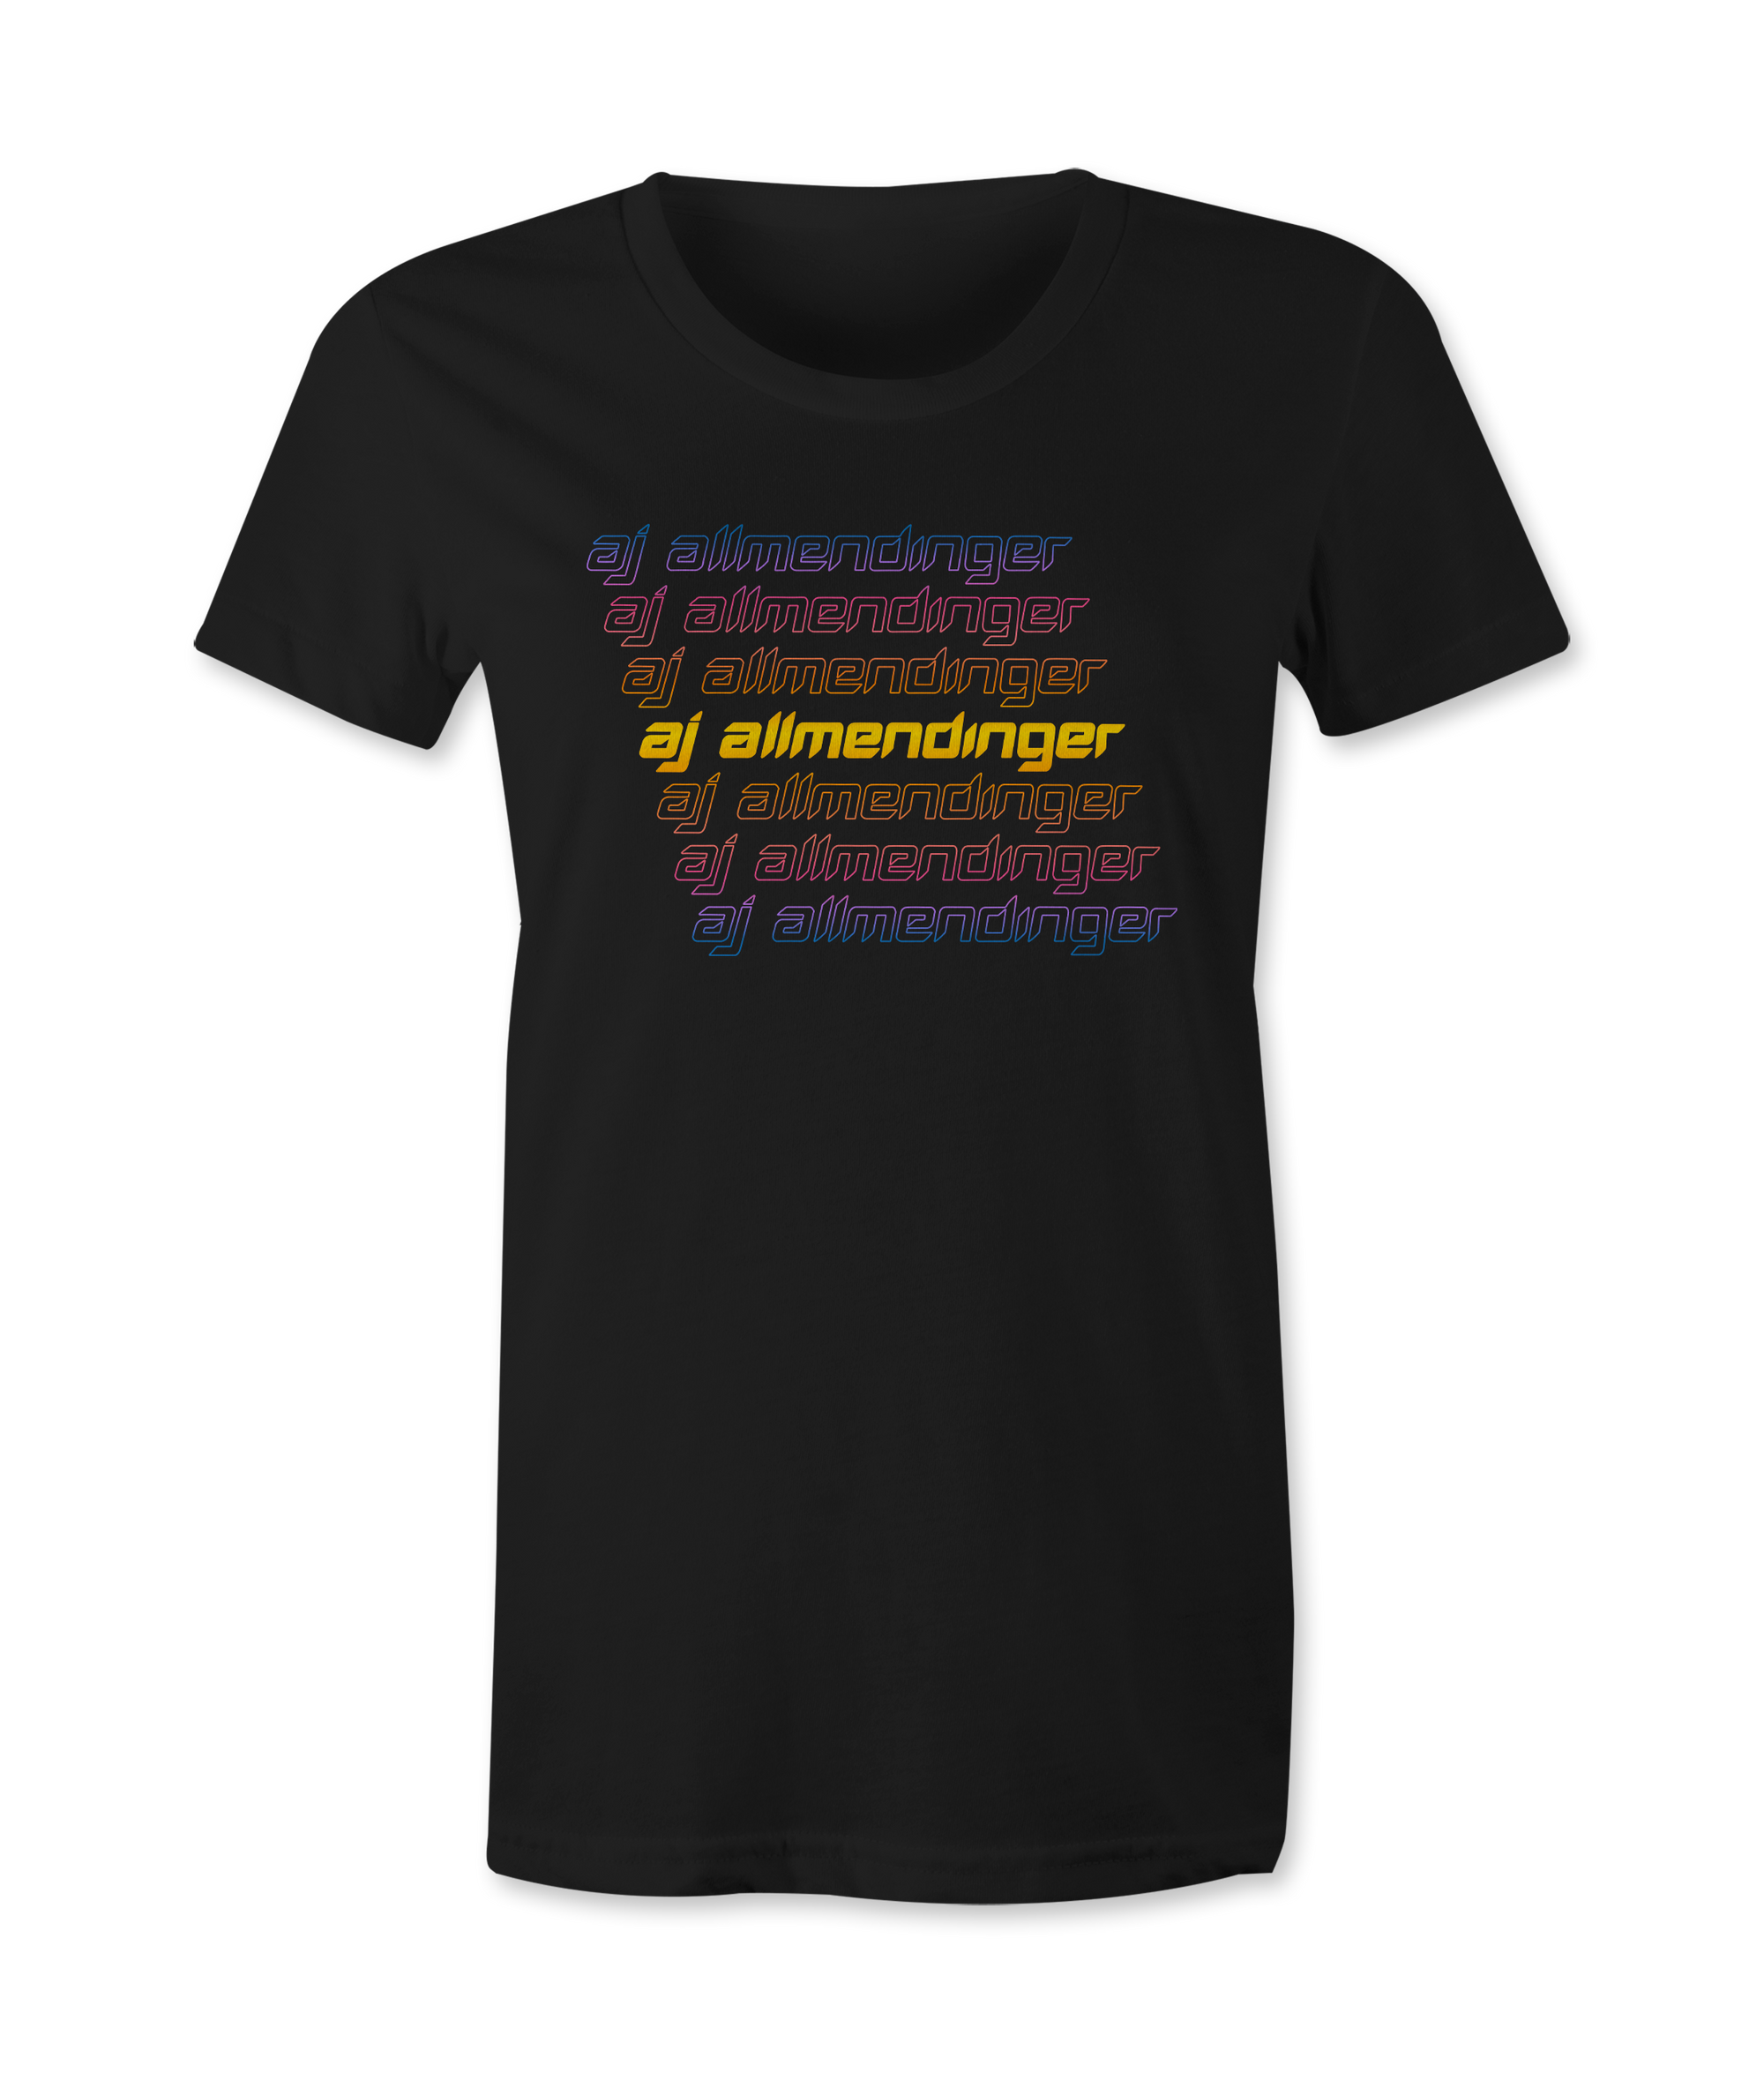 AJ Allmendinger - Sunrise Name Women's T-Shirts Black Acid Apparel